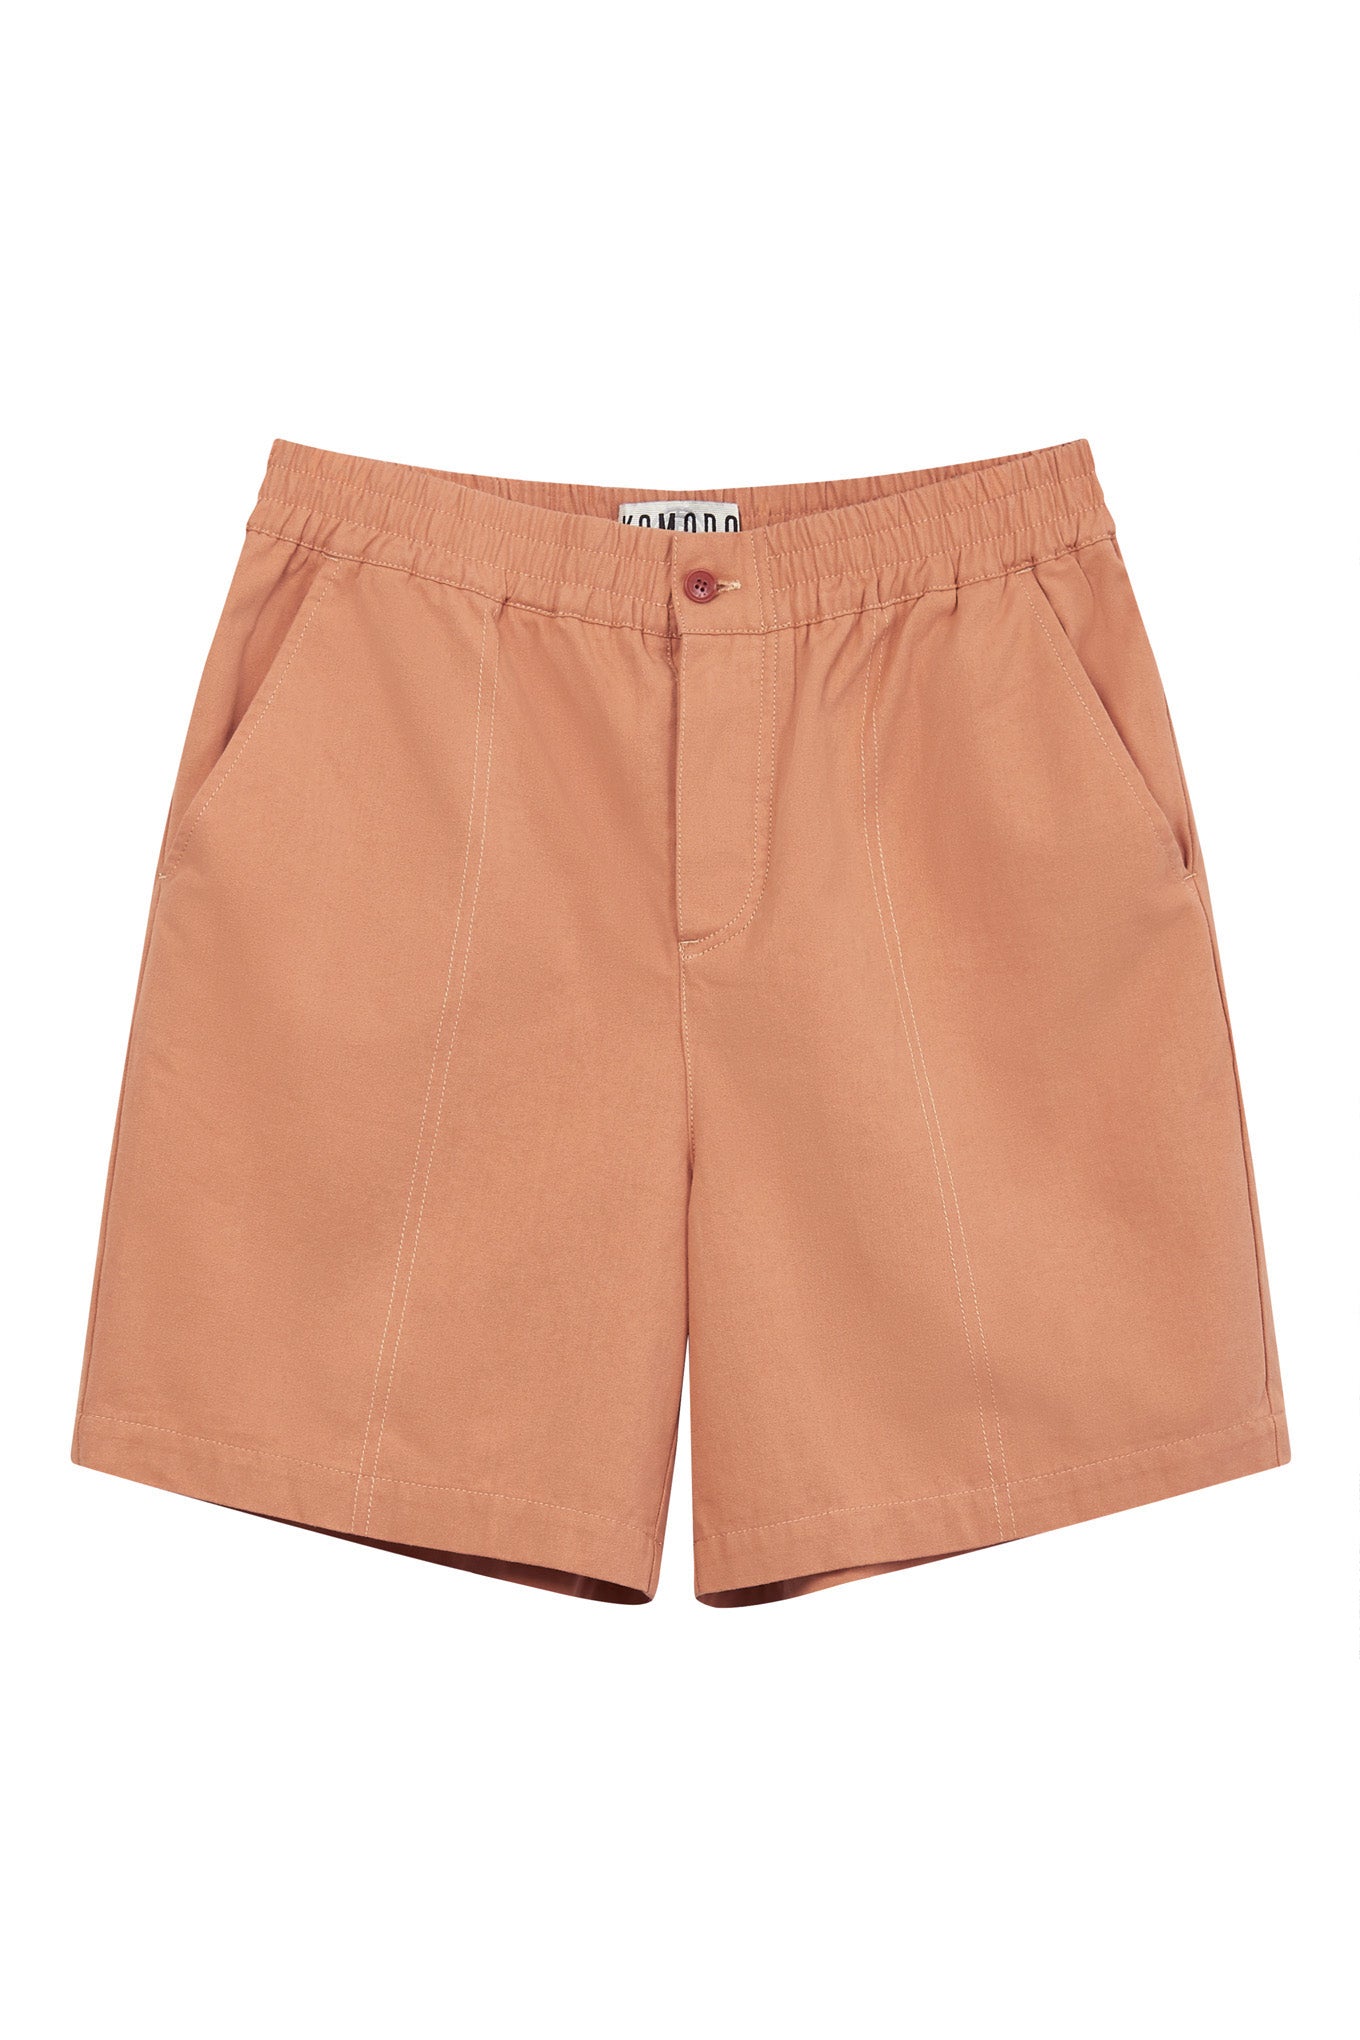 Orange Mario shorts made from 100% organic cotton from Komodo